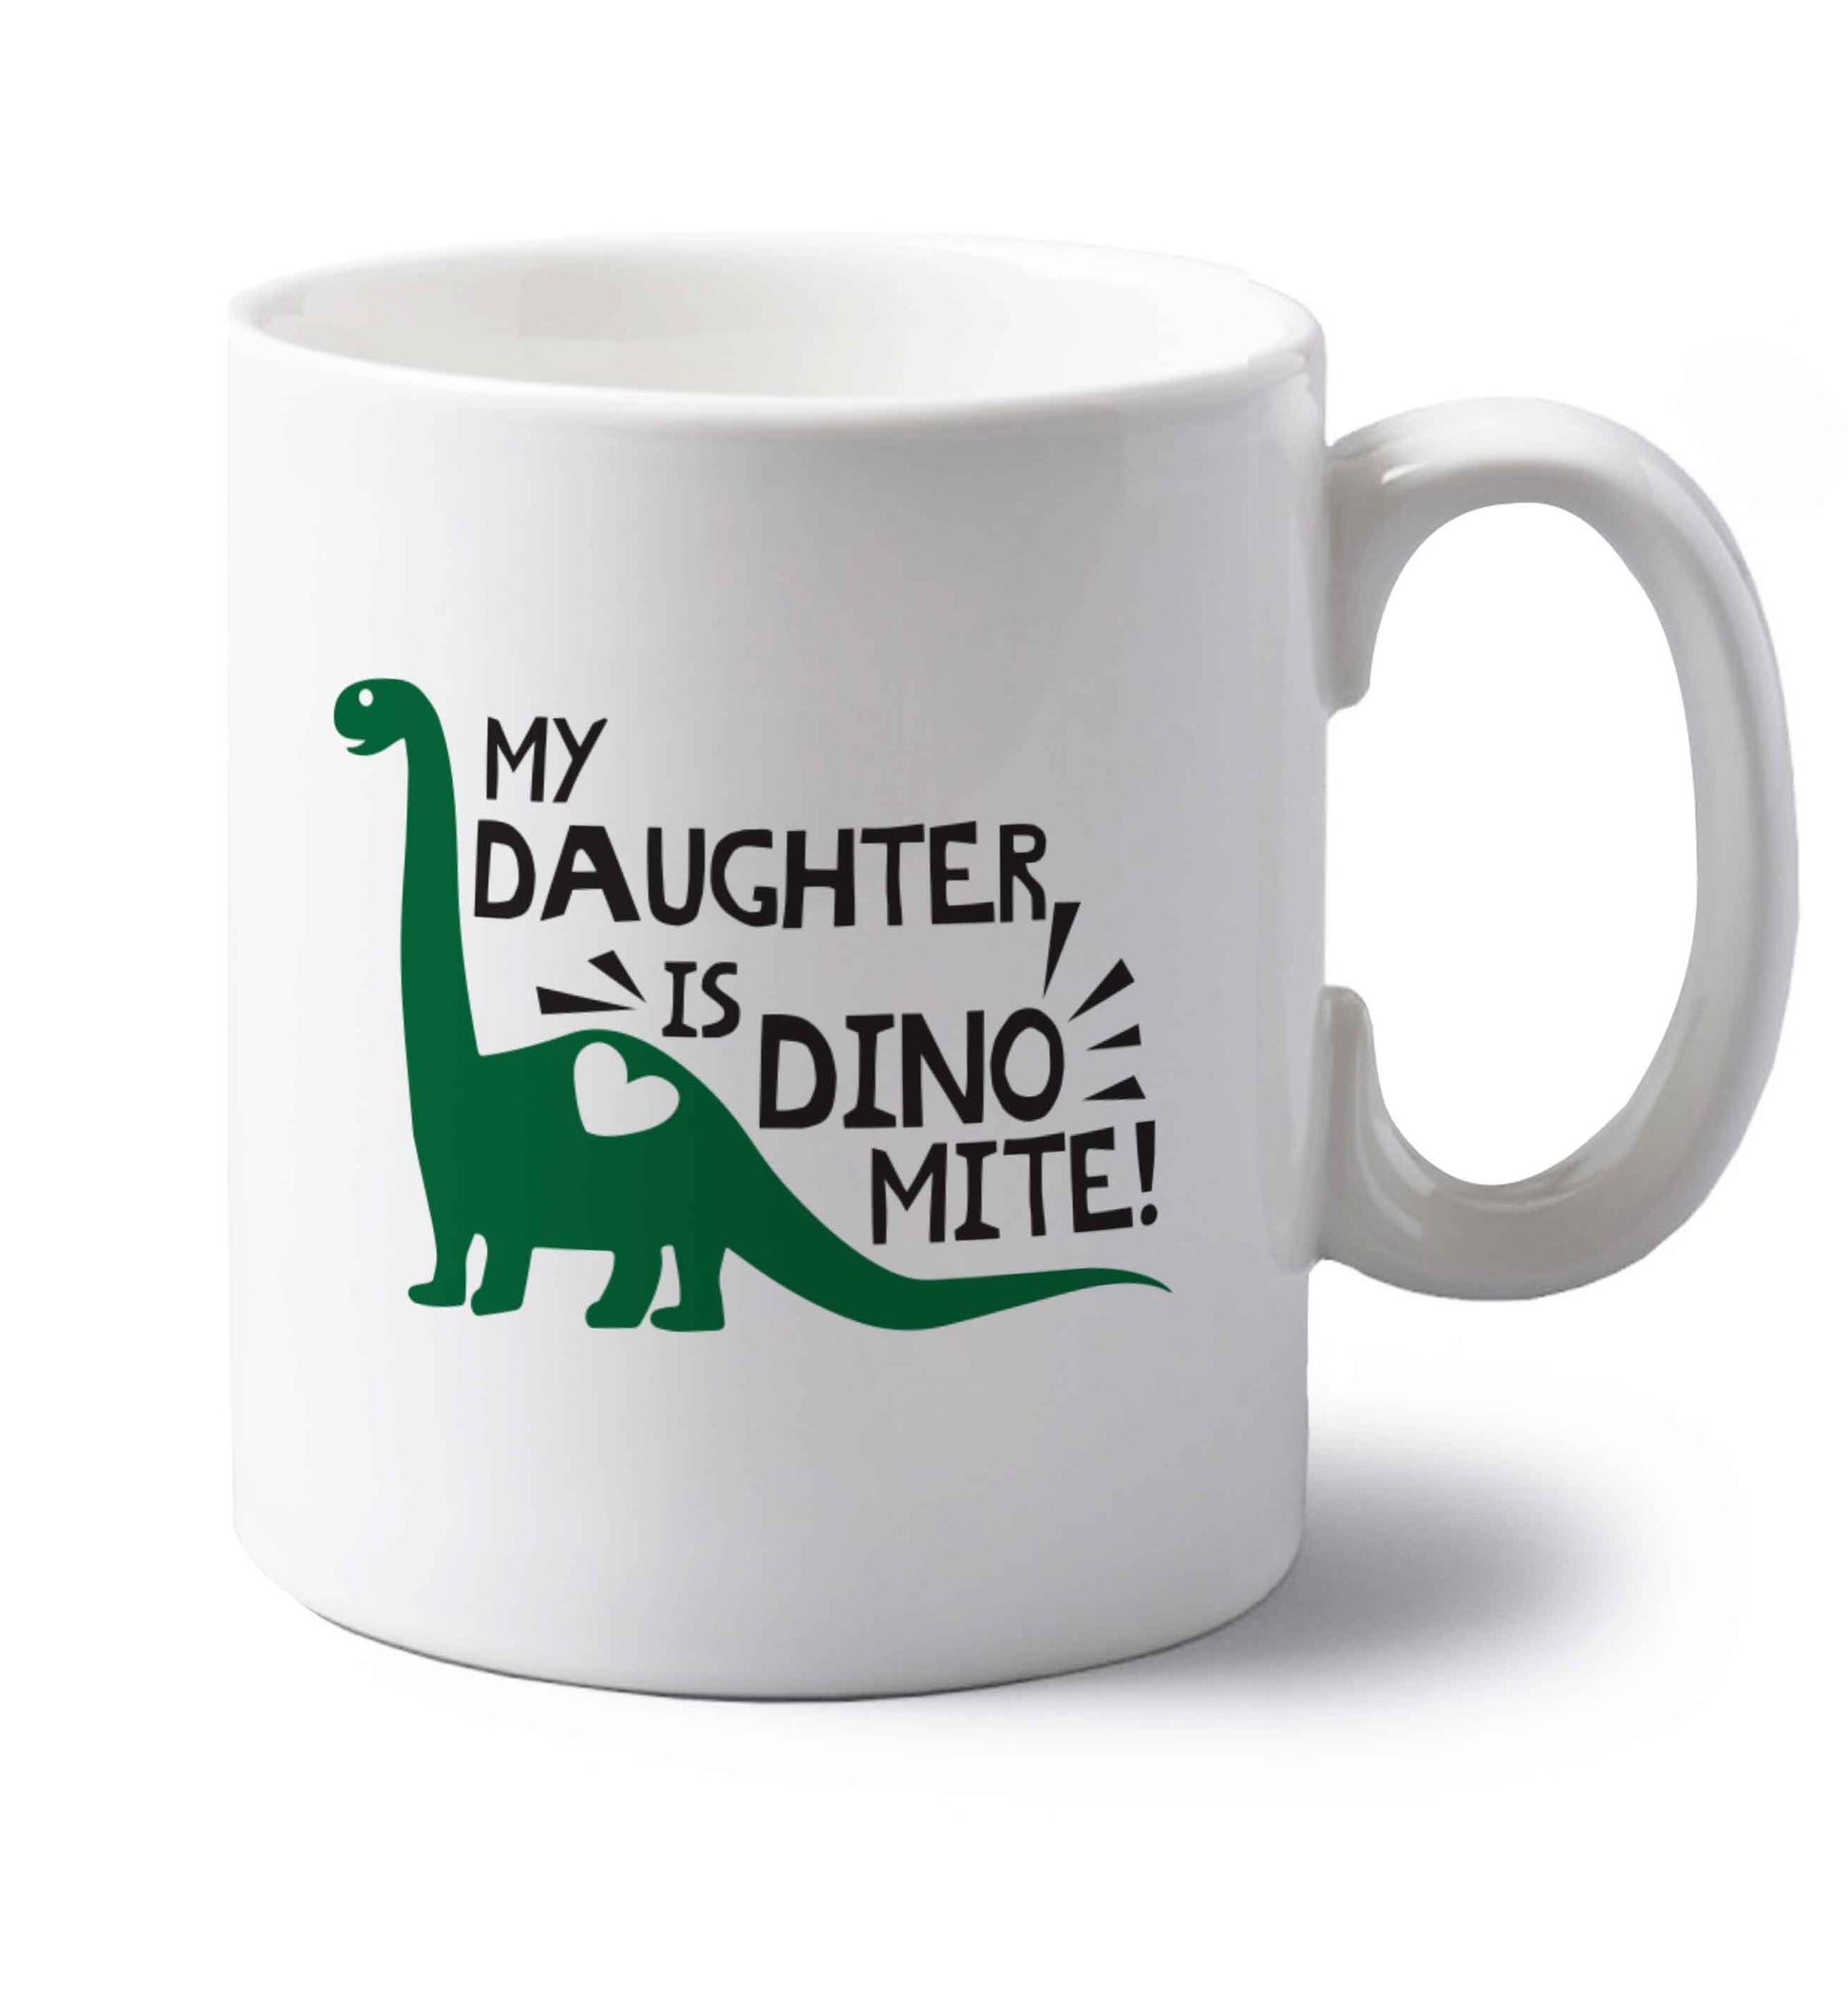 My daughter is dinomite! left handed white ceramic mug 